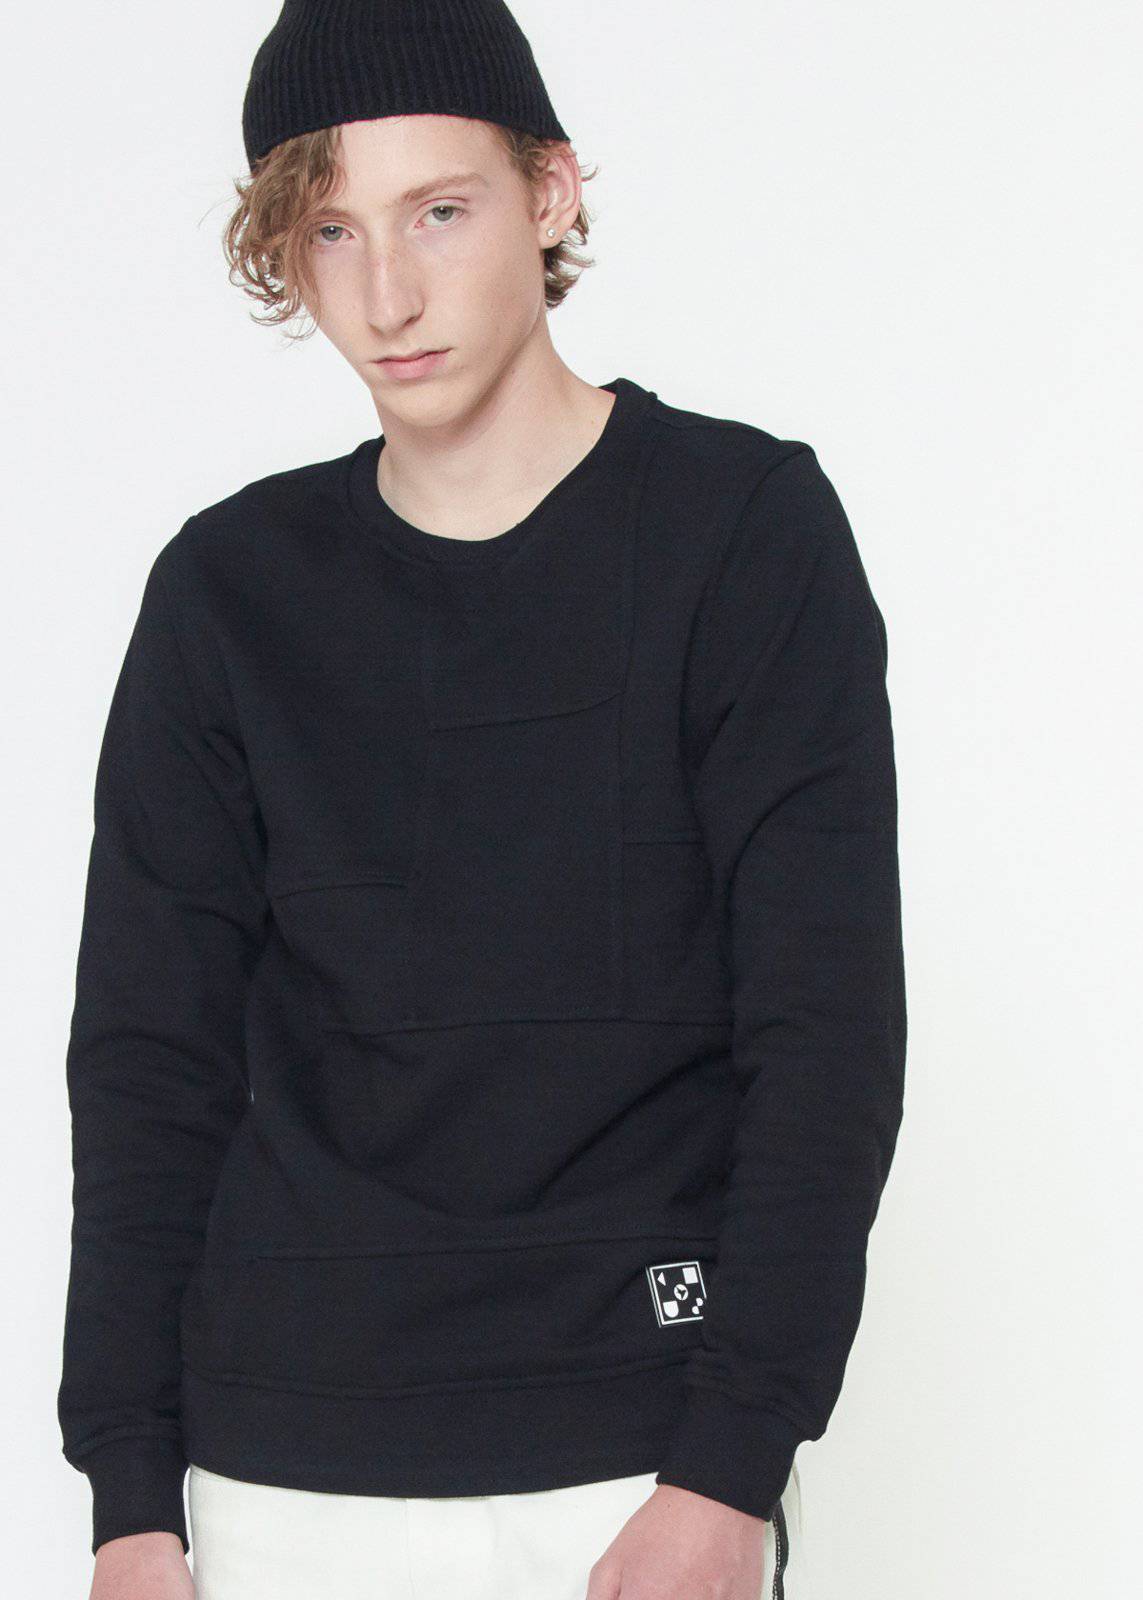 Konus Men's Sweatshirt w/ Paneling on Front  in Black by Shop at Konus